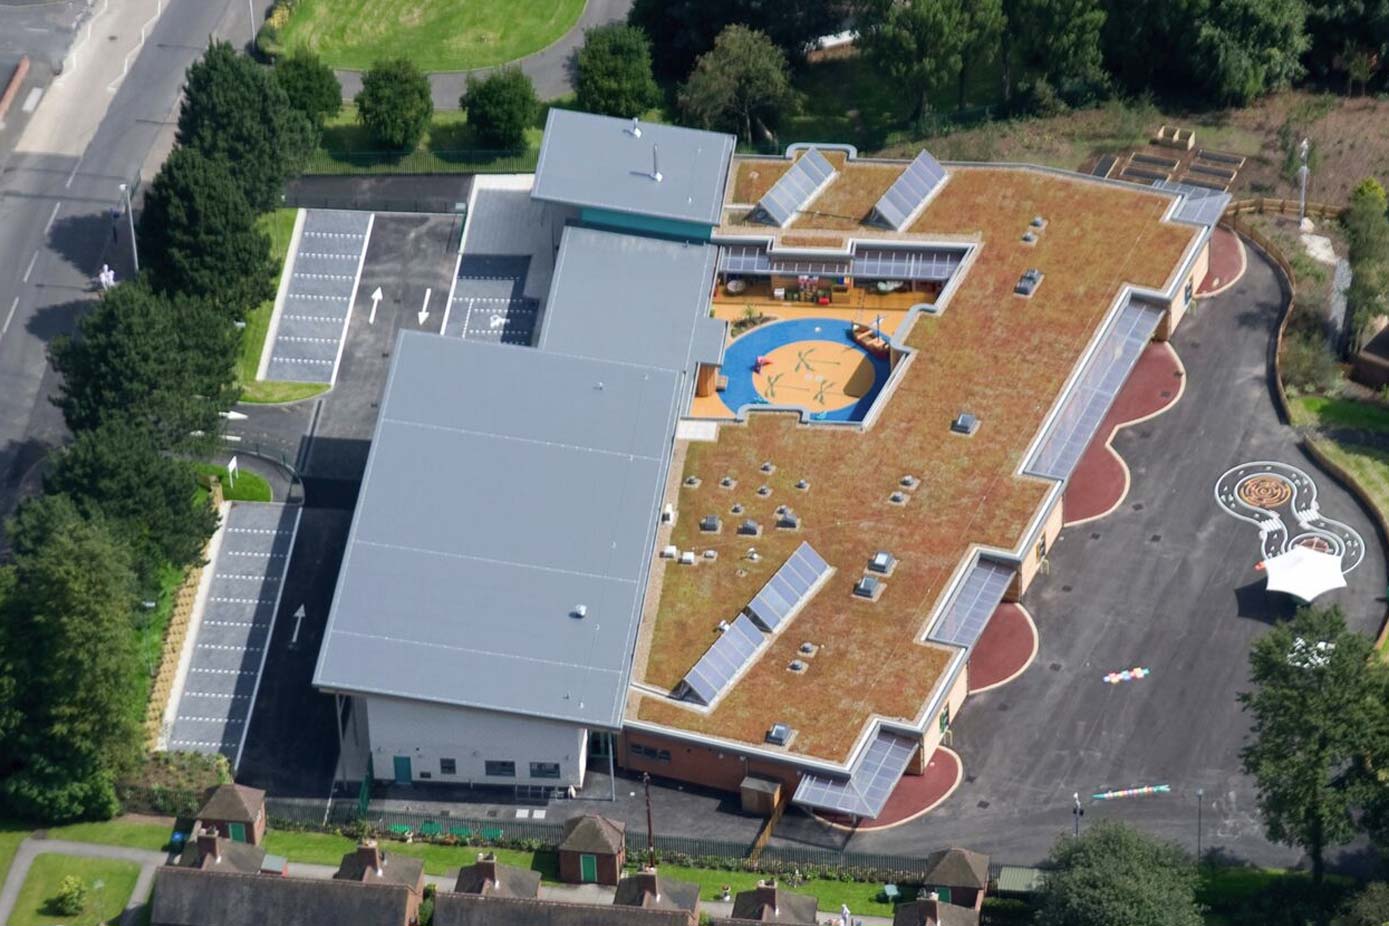 Green roof installation in Smethwick